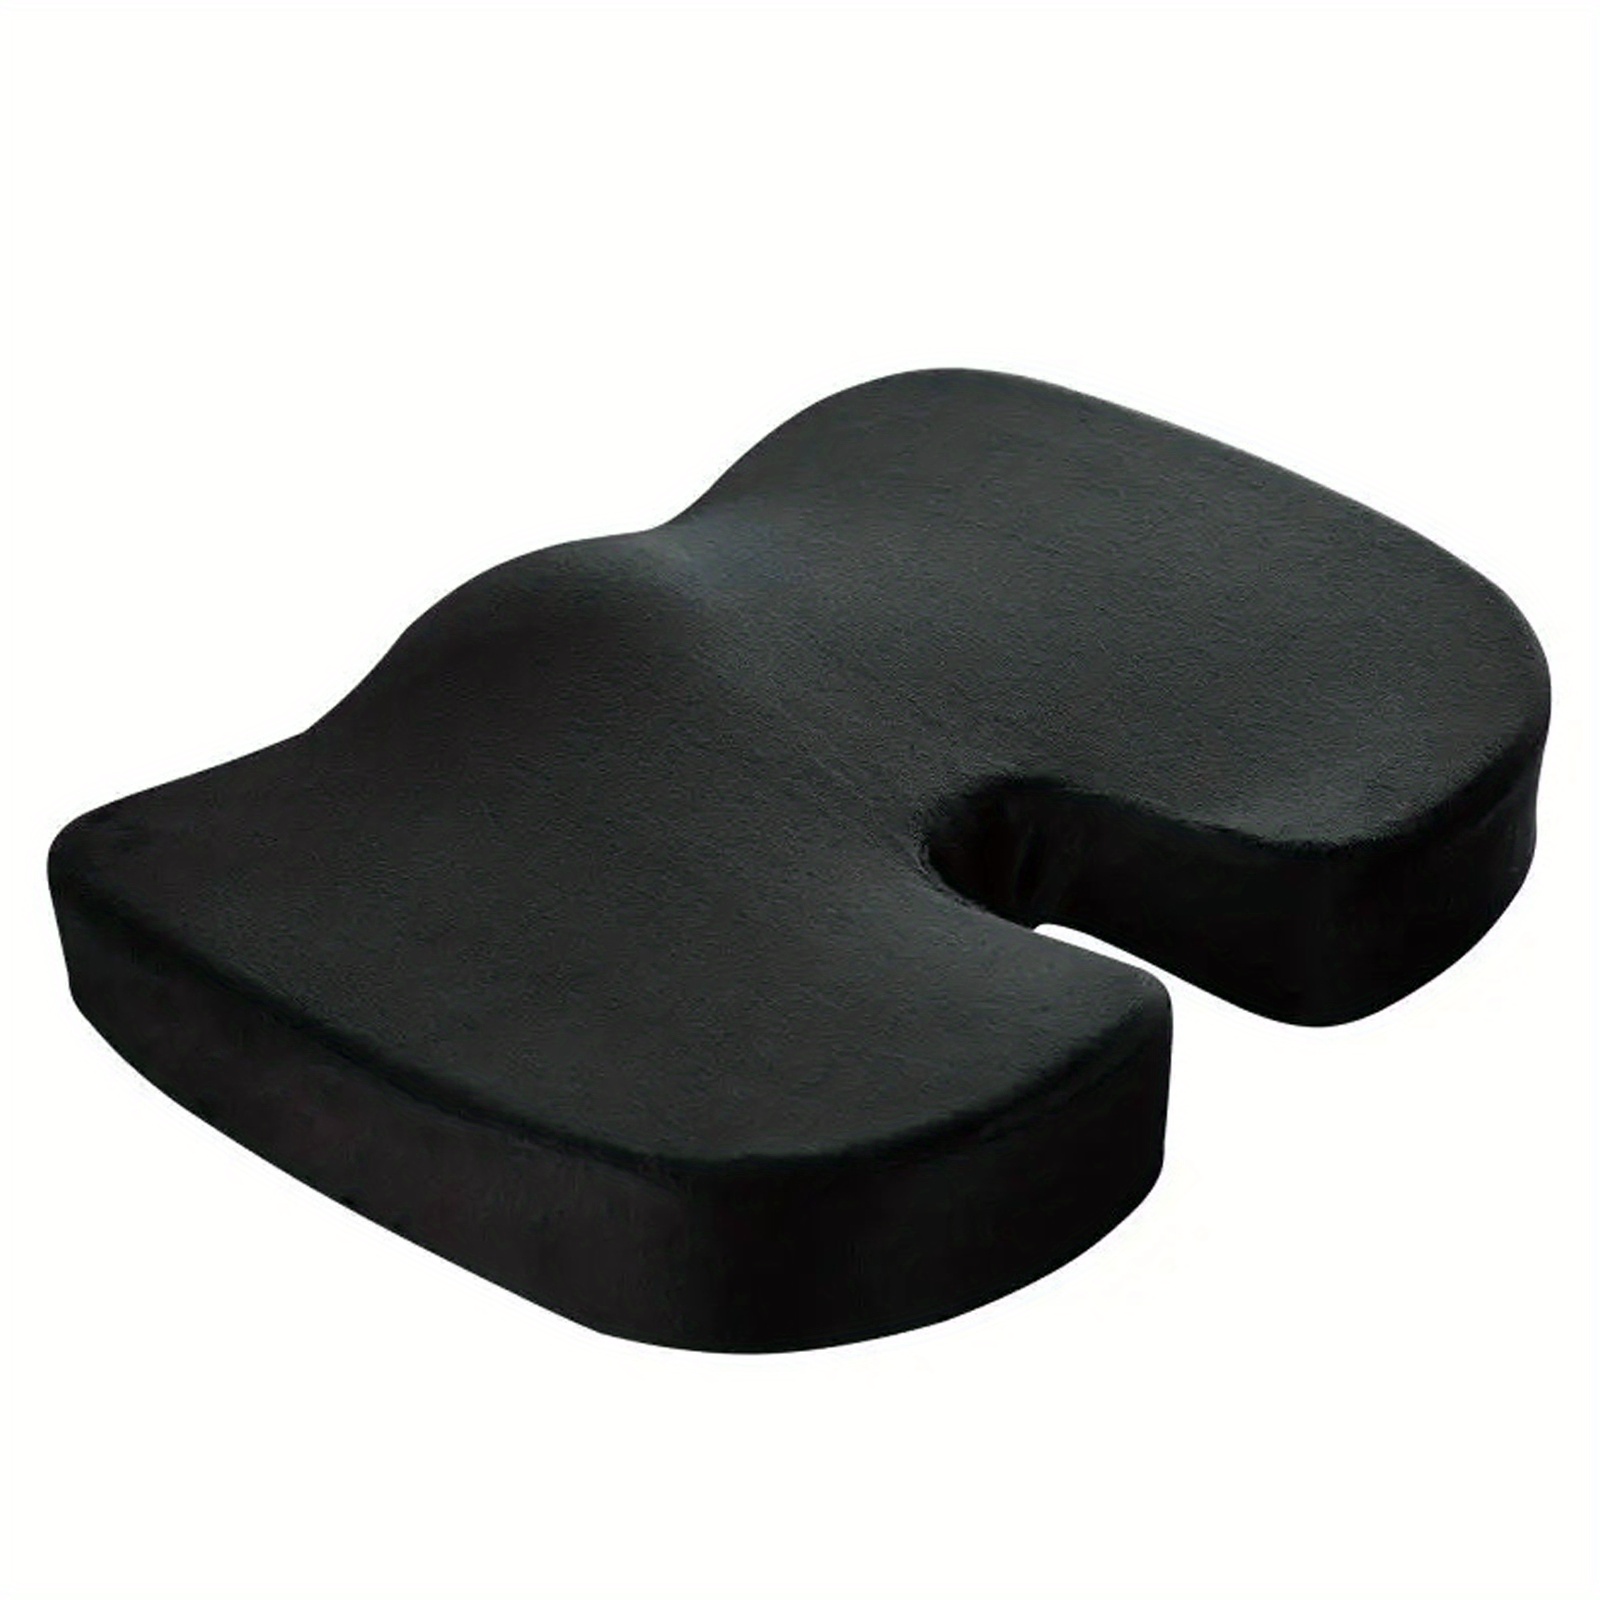 WAOAW Seat Cushion Office Chair Cushions Butt Pillow for Long